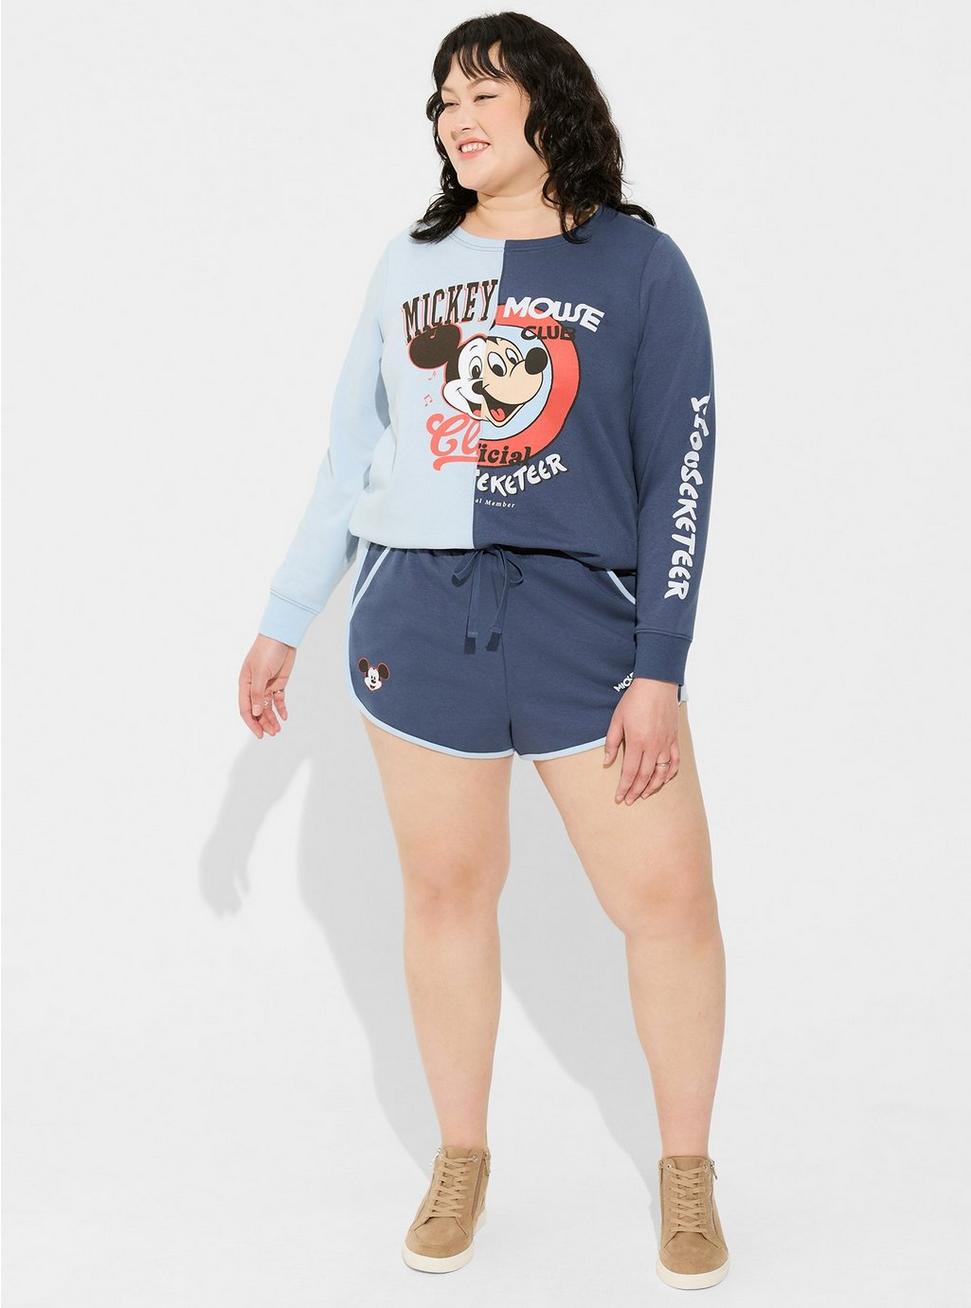 Plus Size Disney Mickey Mouse Club Classic Fit Crew Neck Cozy Fleece Sweatshirt, PEACOAT, alternate